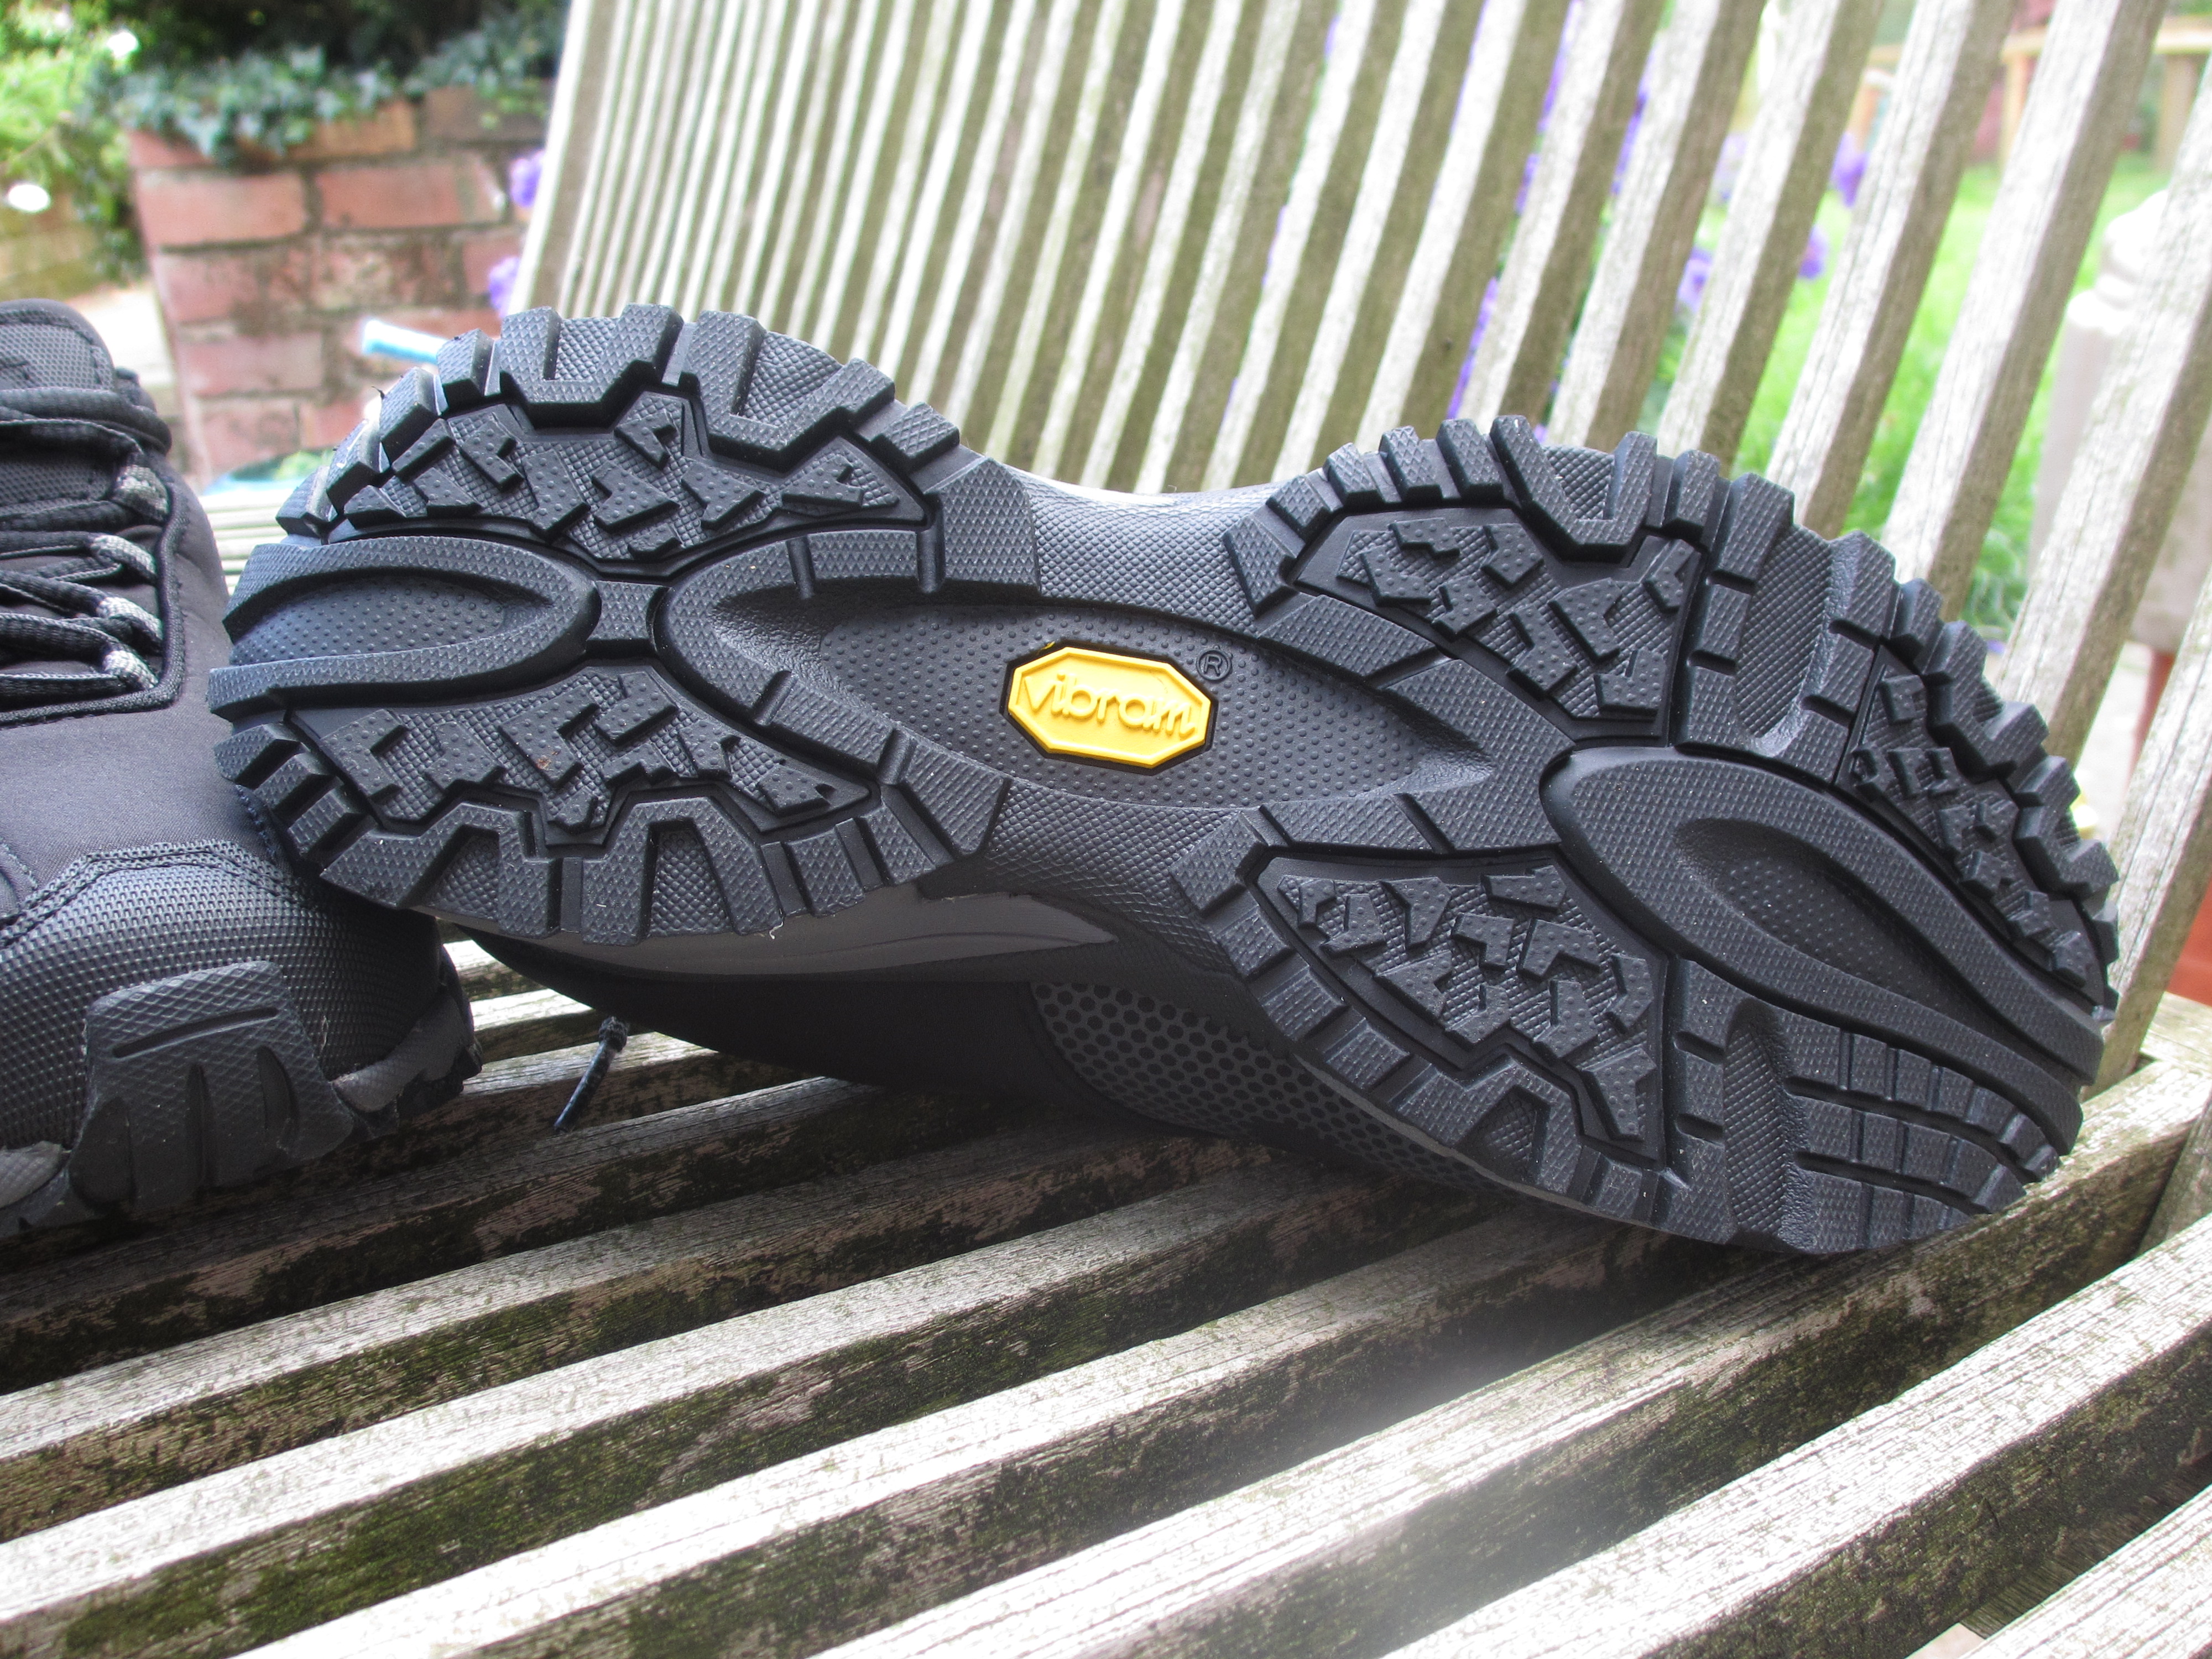 Vibram sole on DLX trail shoe